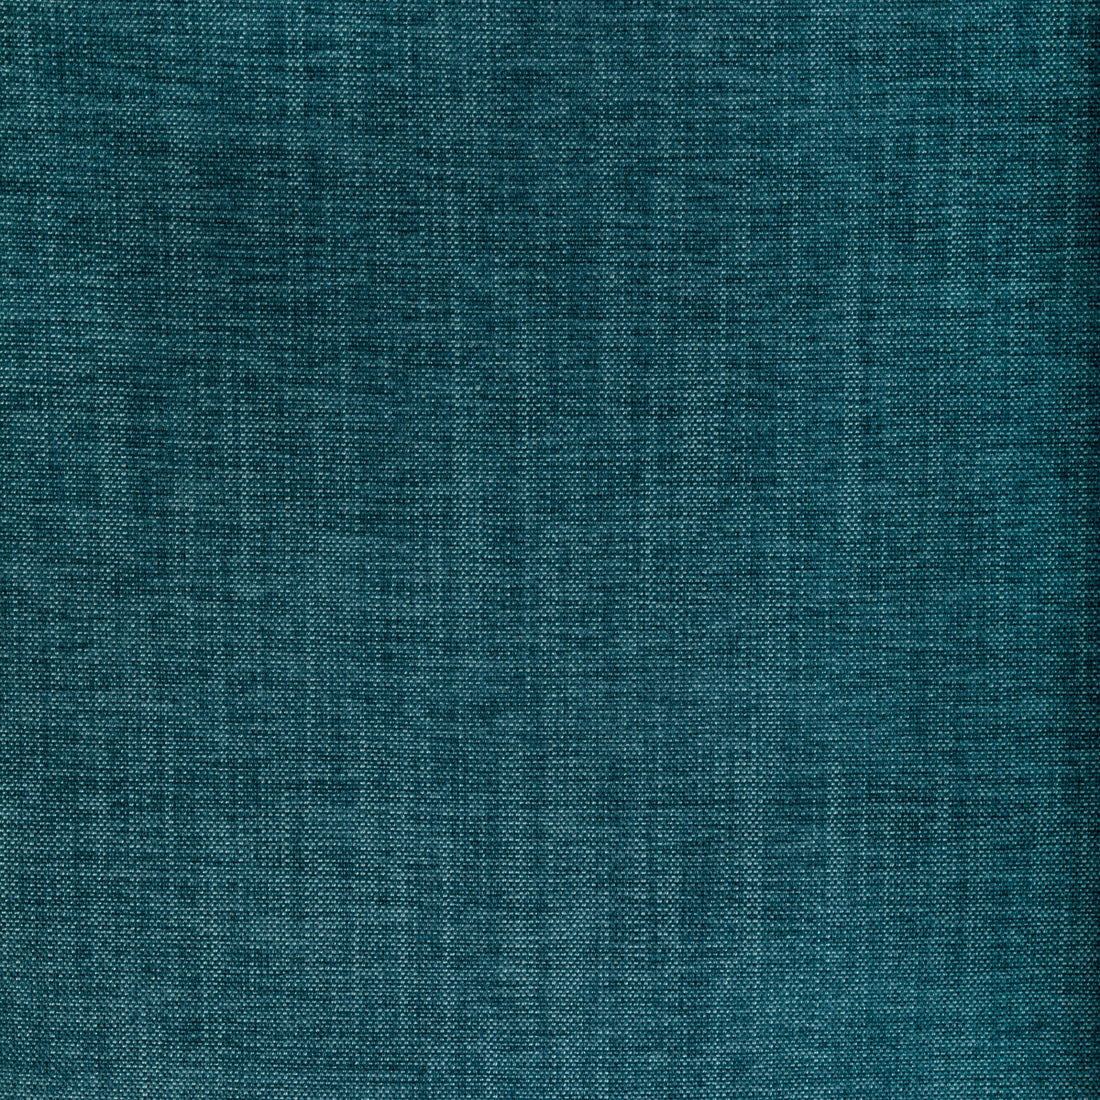 Kravet Smart fabric in 36650-515 color - pattern 36650.515.0 - by Kravet Smart in the Performance Kravetarmor collection